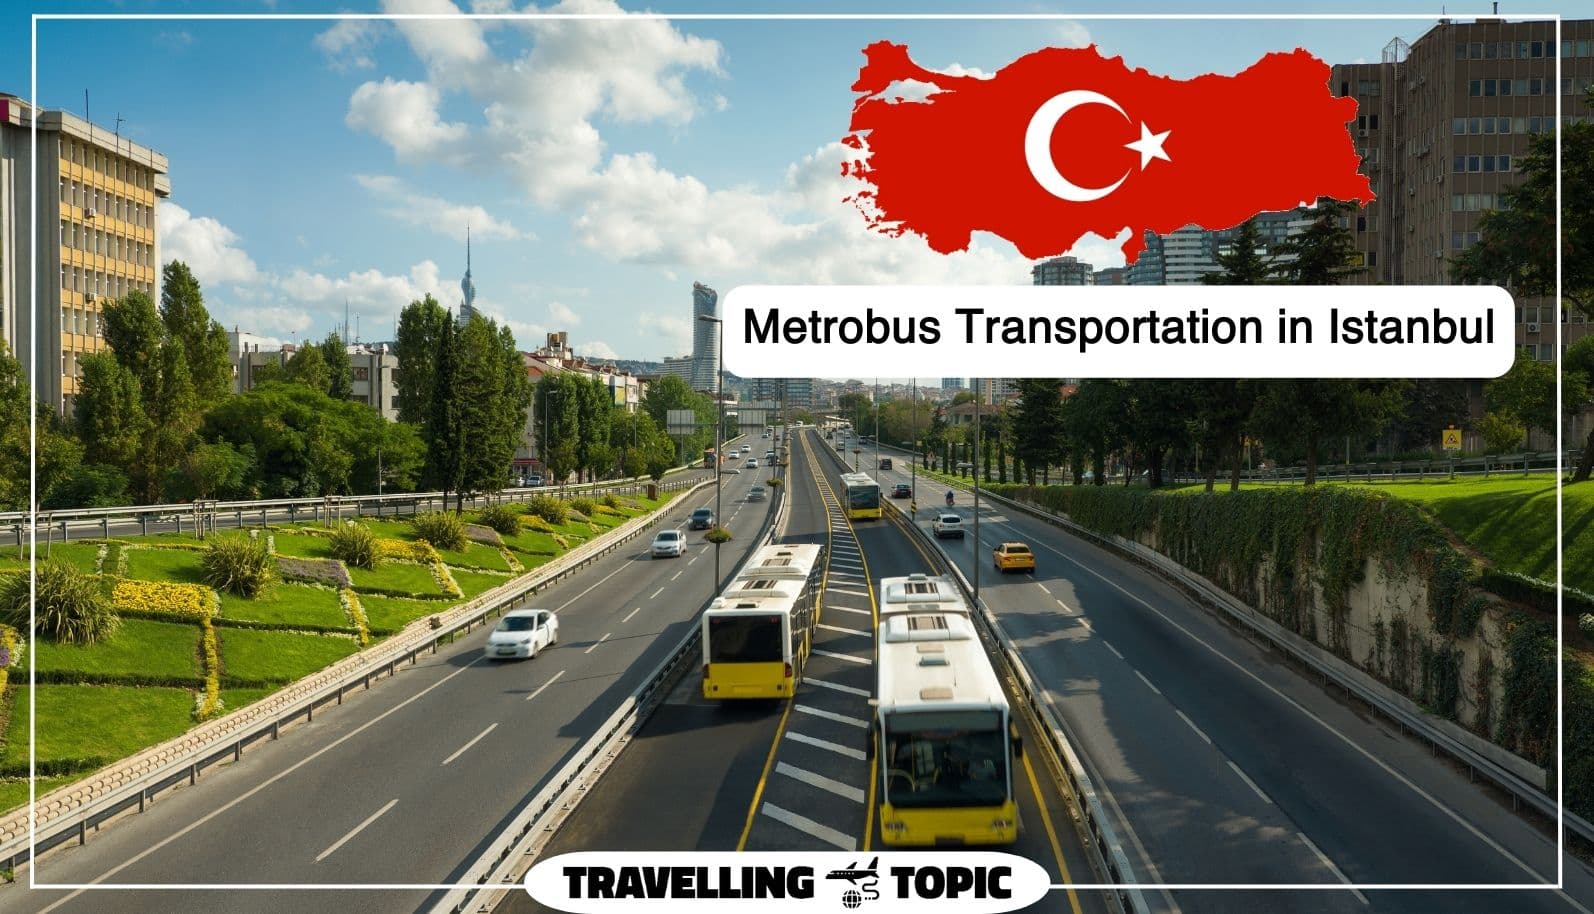 Metrobus Transportation in Istanbul